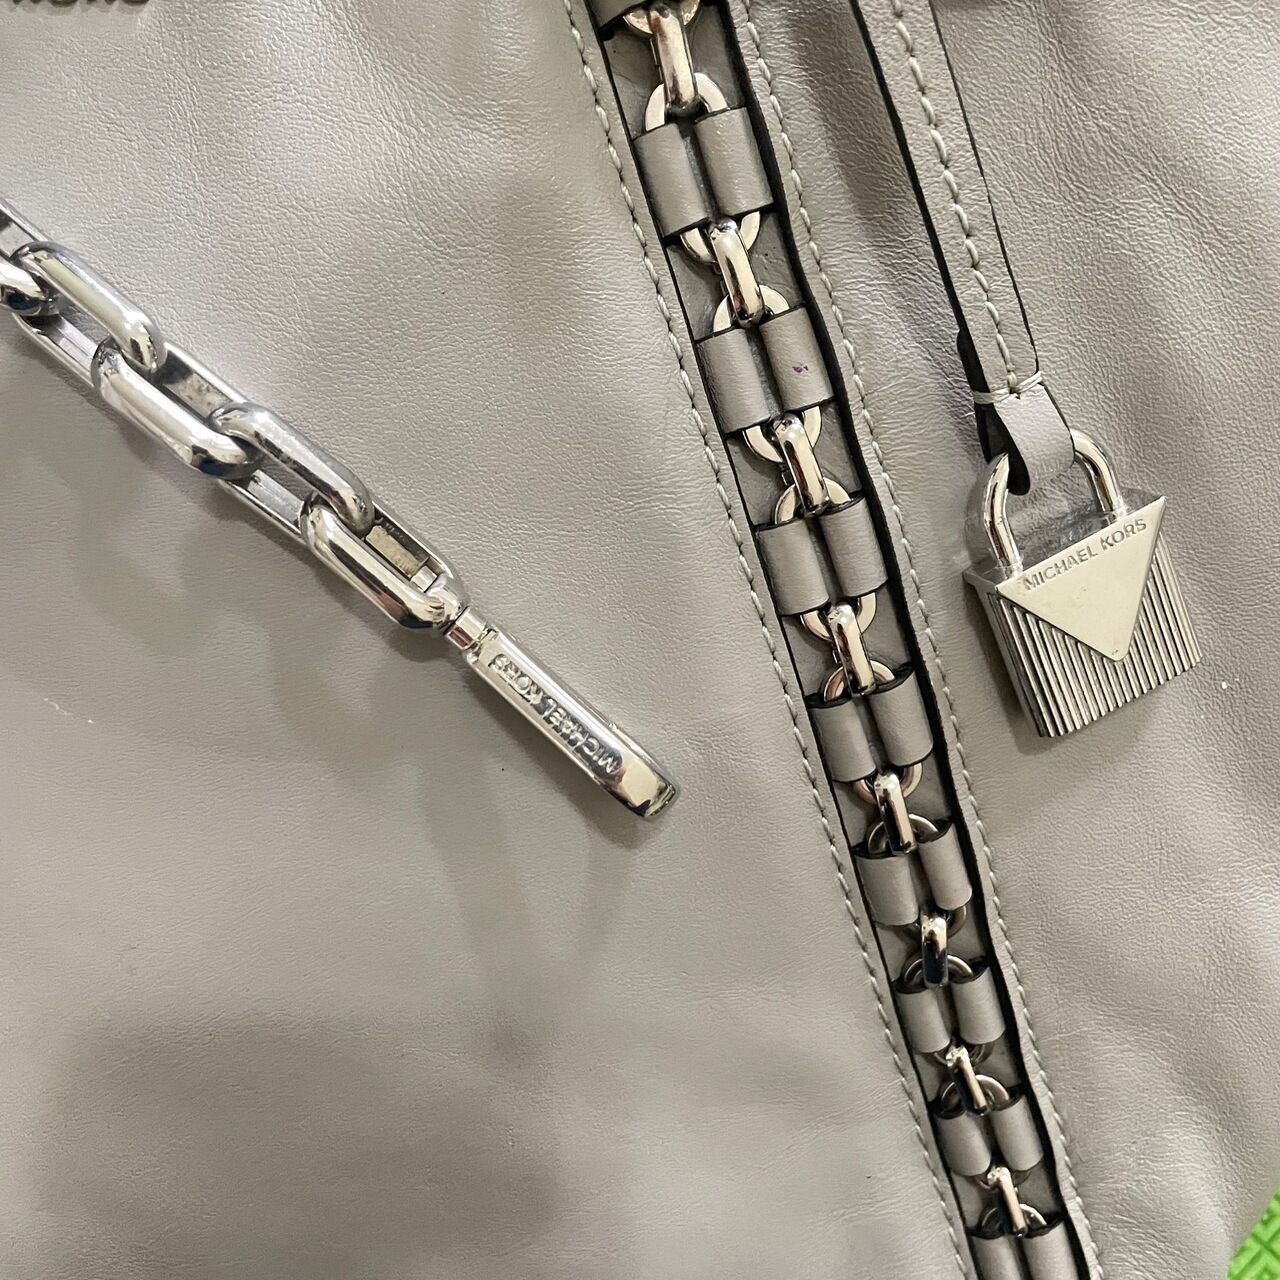 Michael Kors Sadie Light Grey Sling Bag